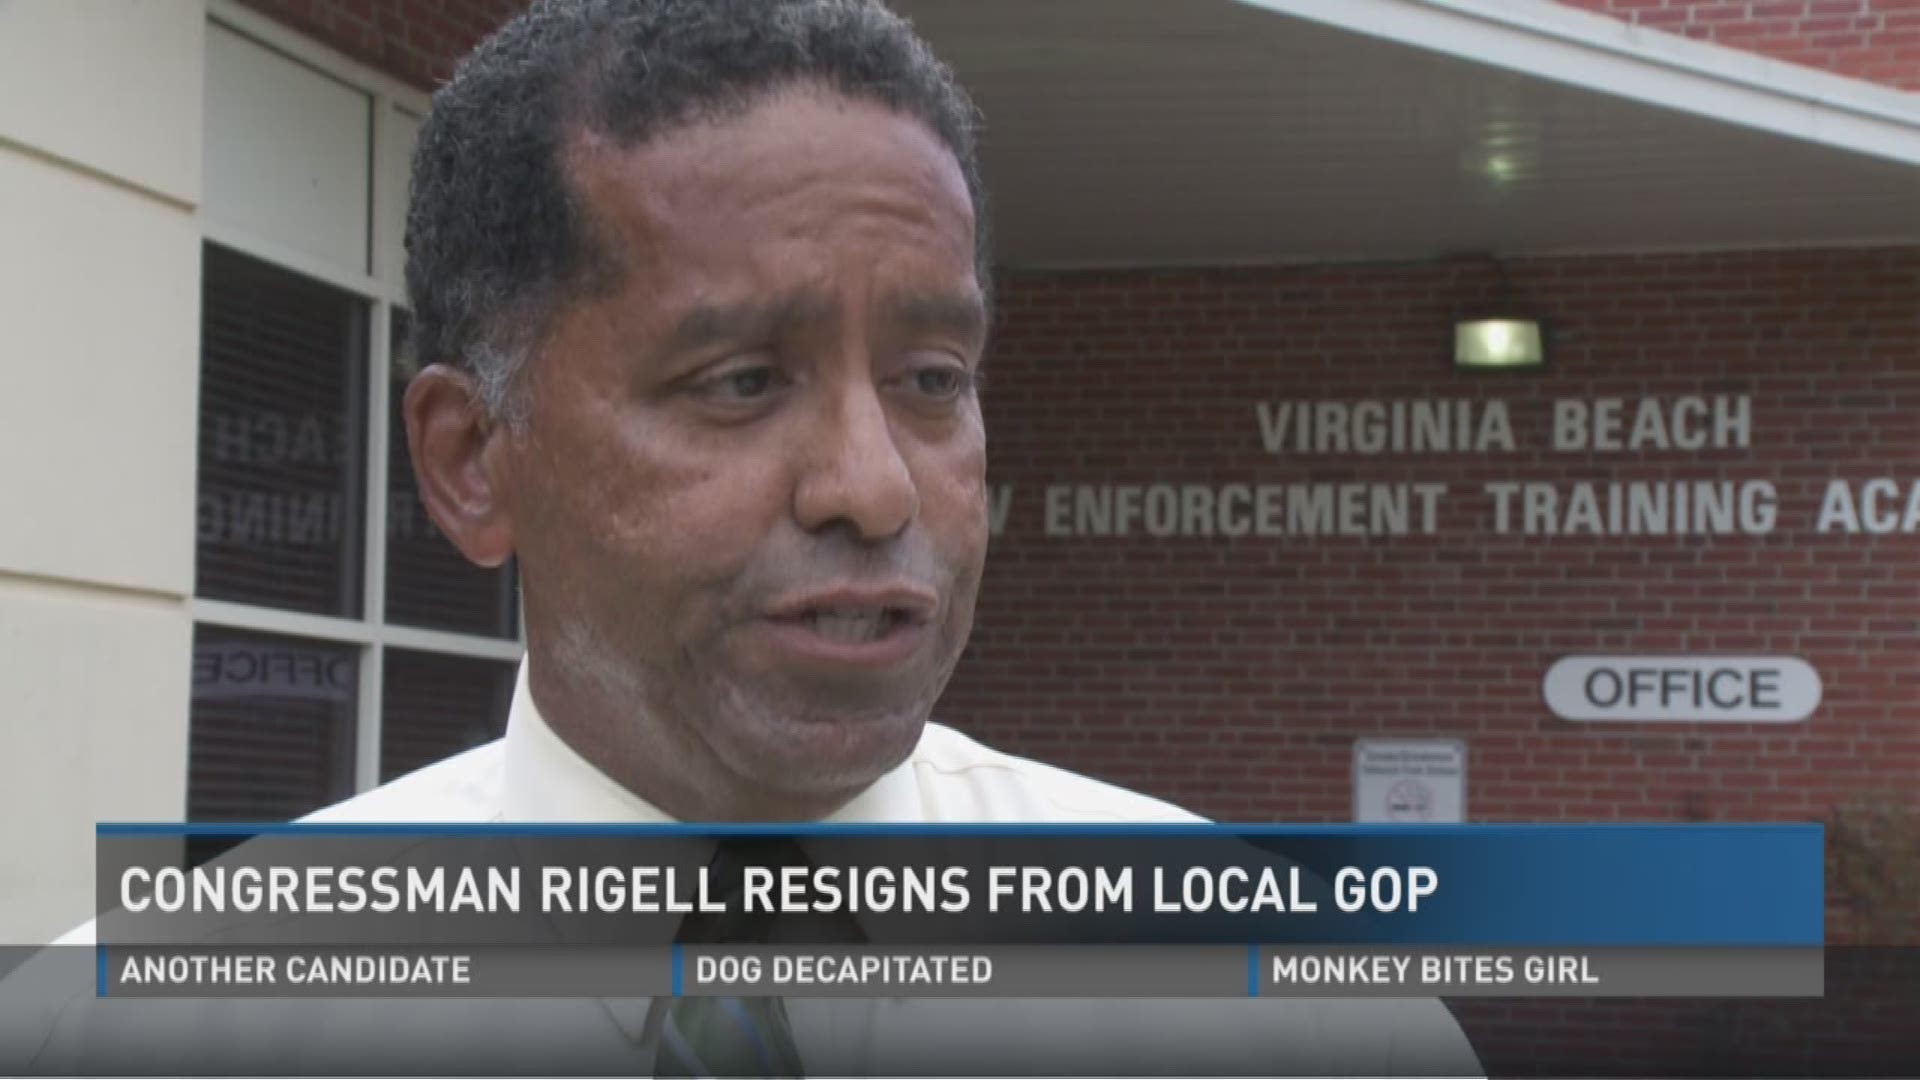 Congressman Rigell resigns from local GOP